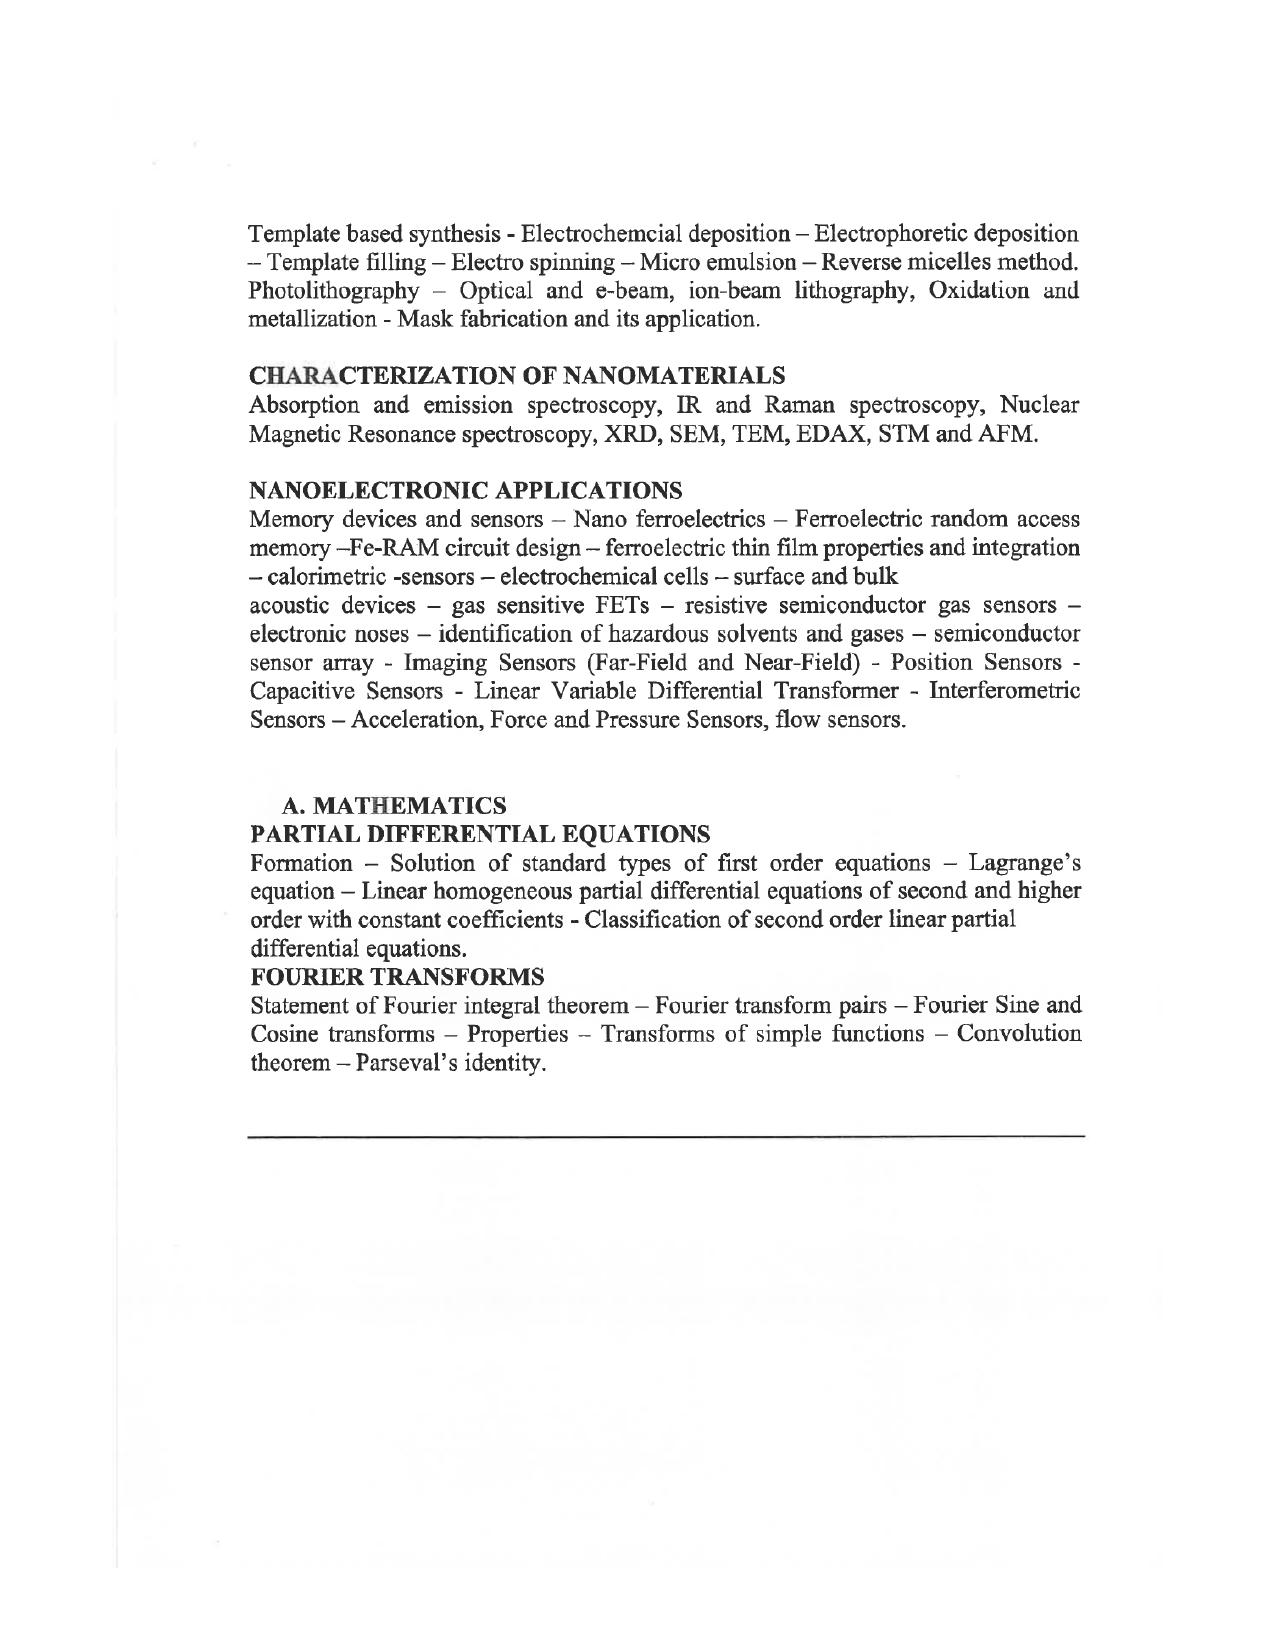 JMI Entrance Exam FACULTY OF NATURAL SCIENCES Syllabus - Page 22